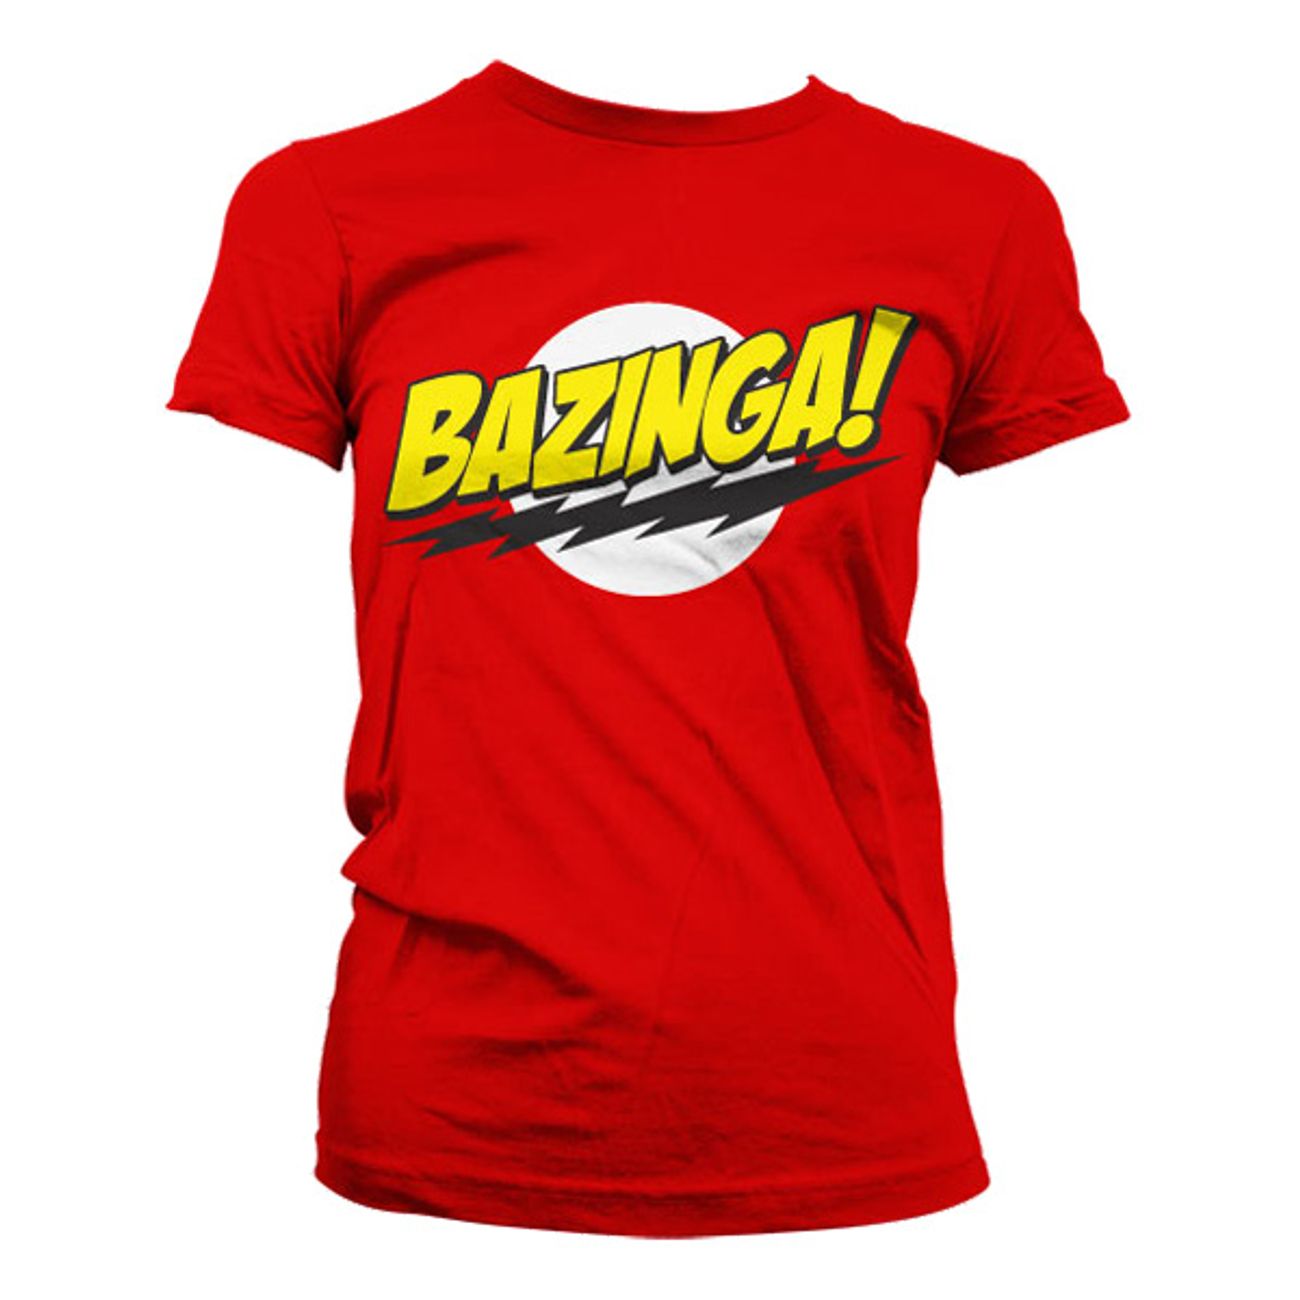 bazinga-girly-t-shirt-1